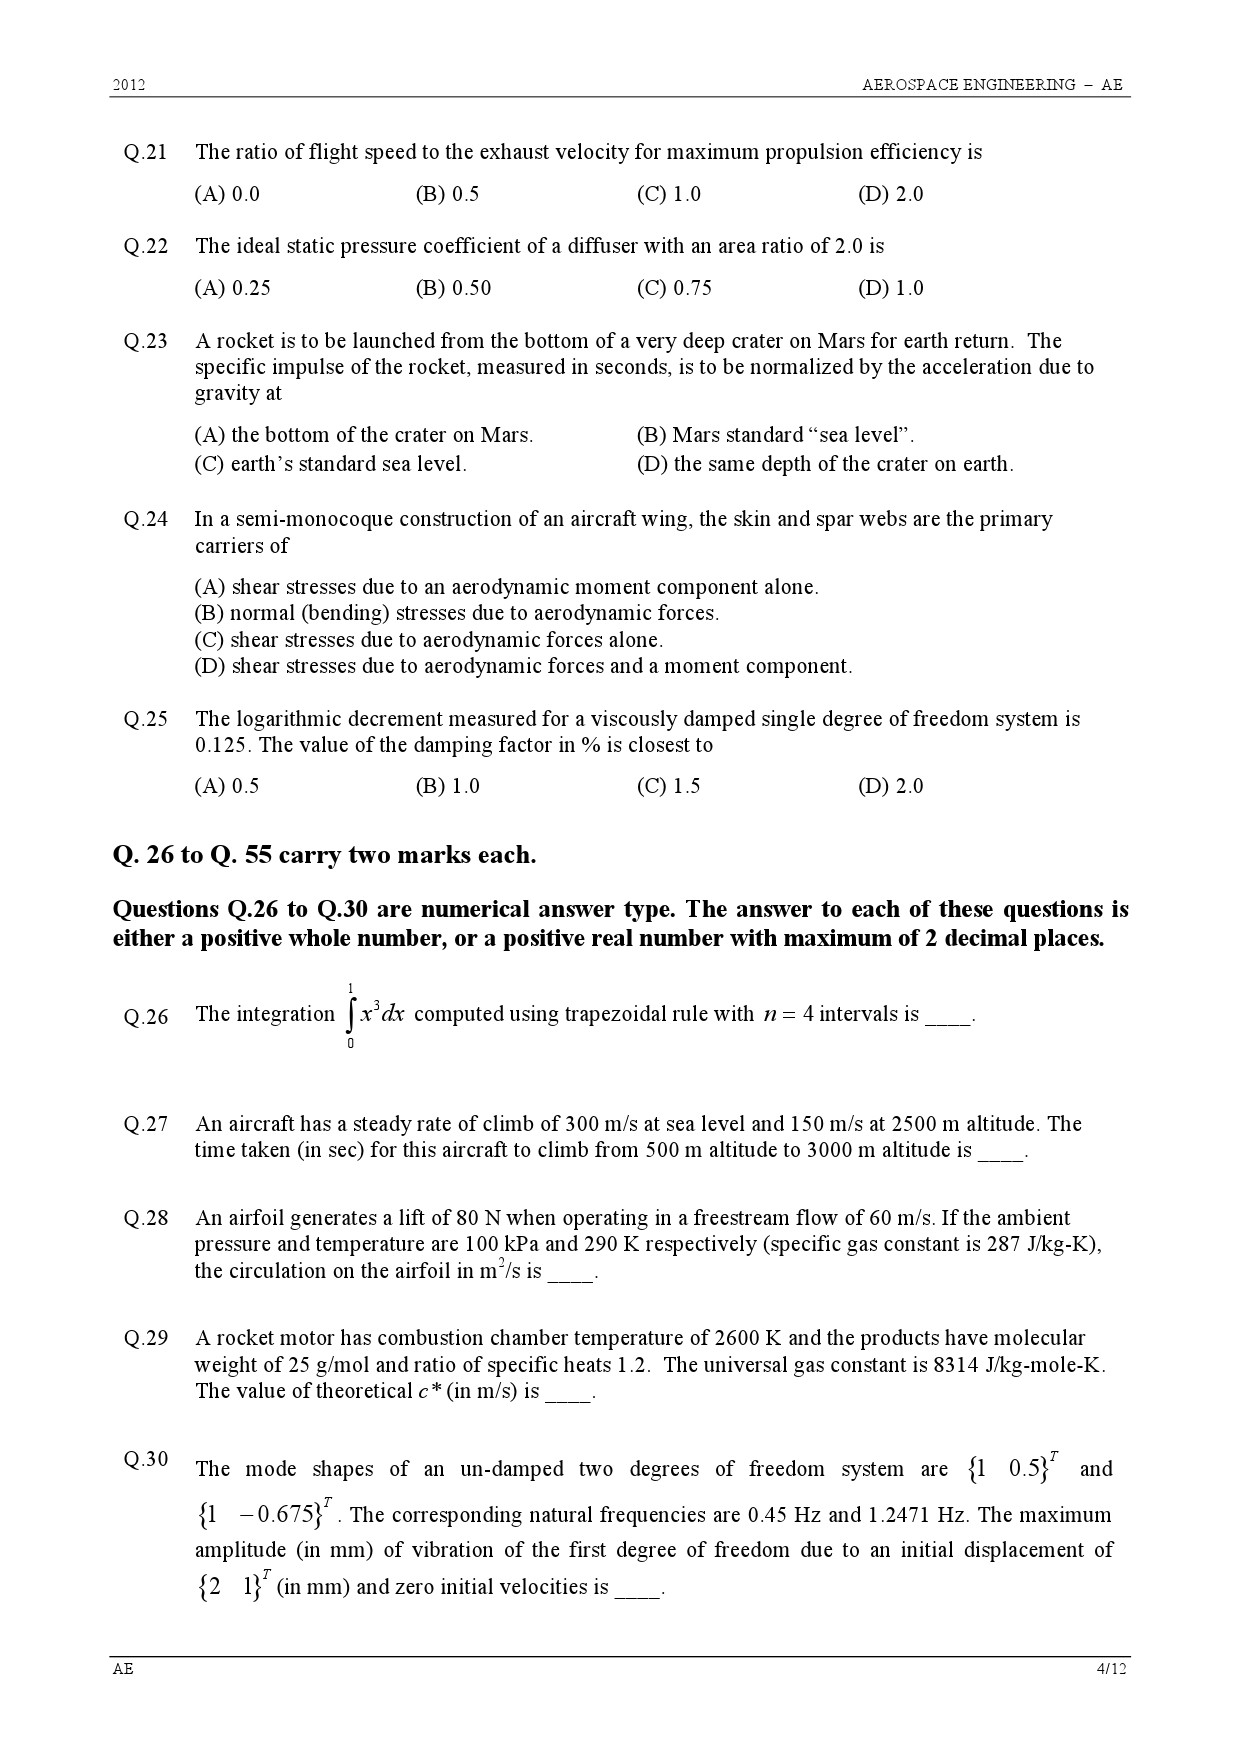 GATE Exam 2012 Aerospace Engineering Question Paper 4